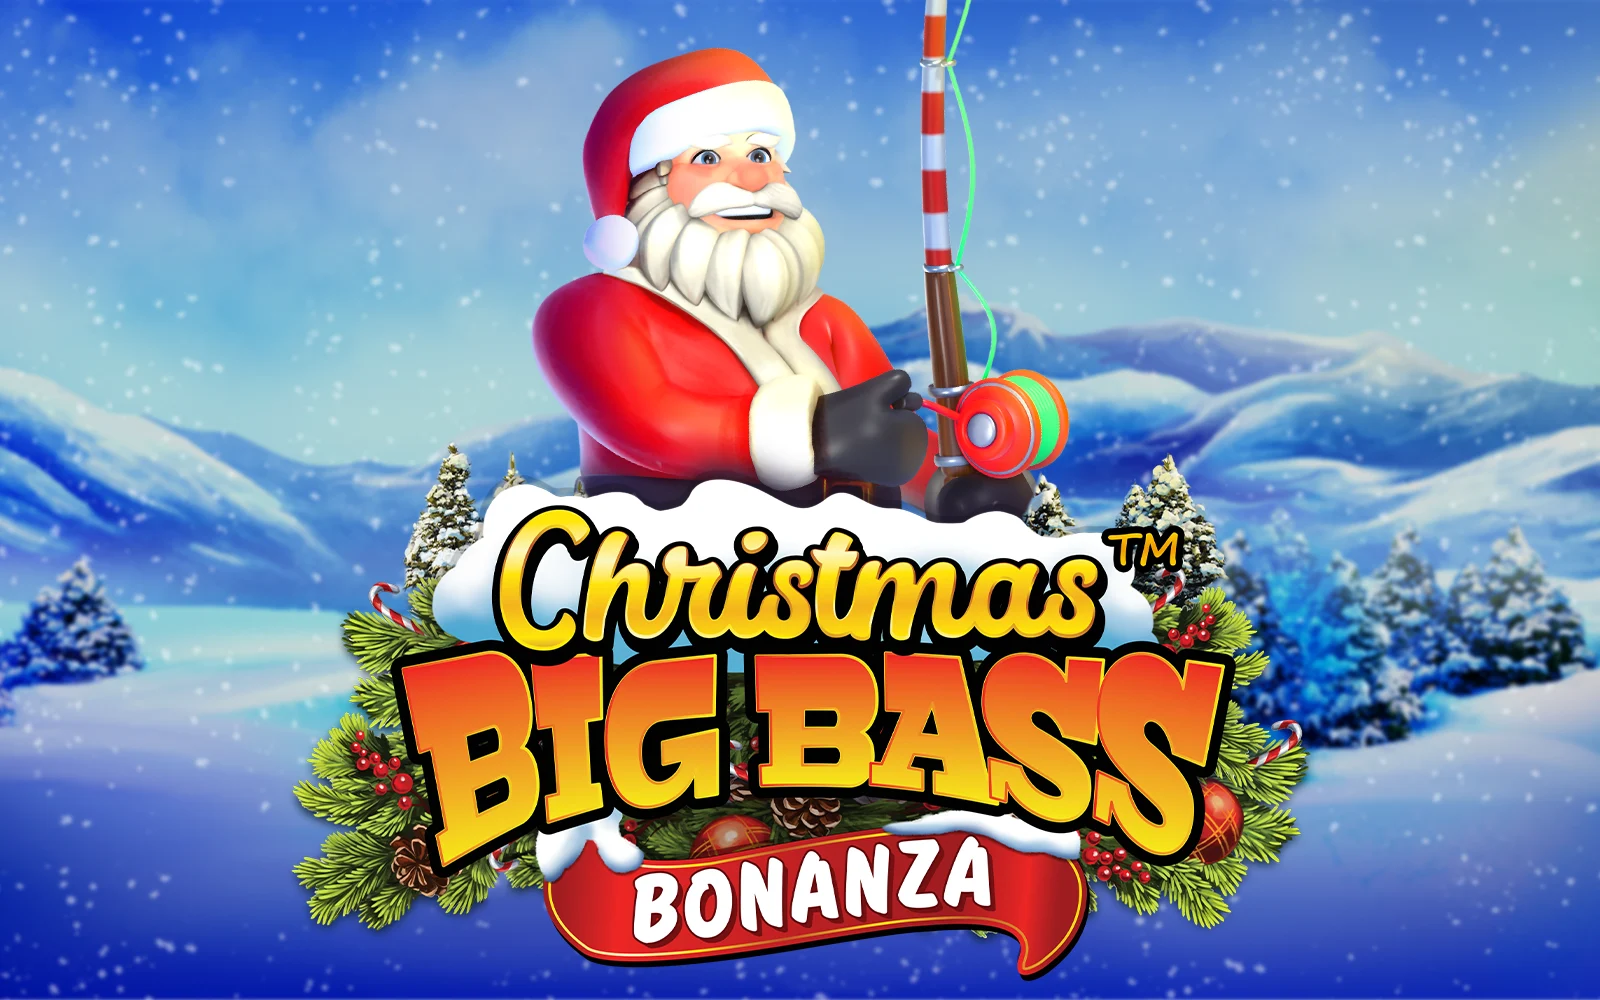 Speel Christmas Big Bass Bonanza™ op Starcasino.be online casino